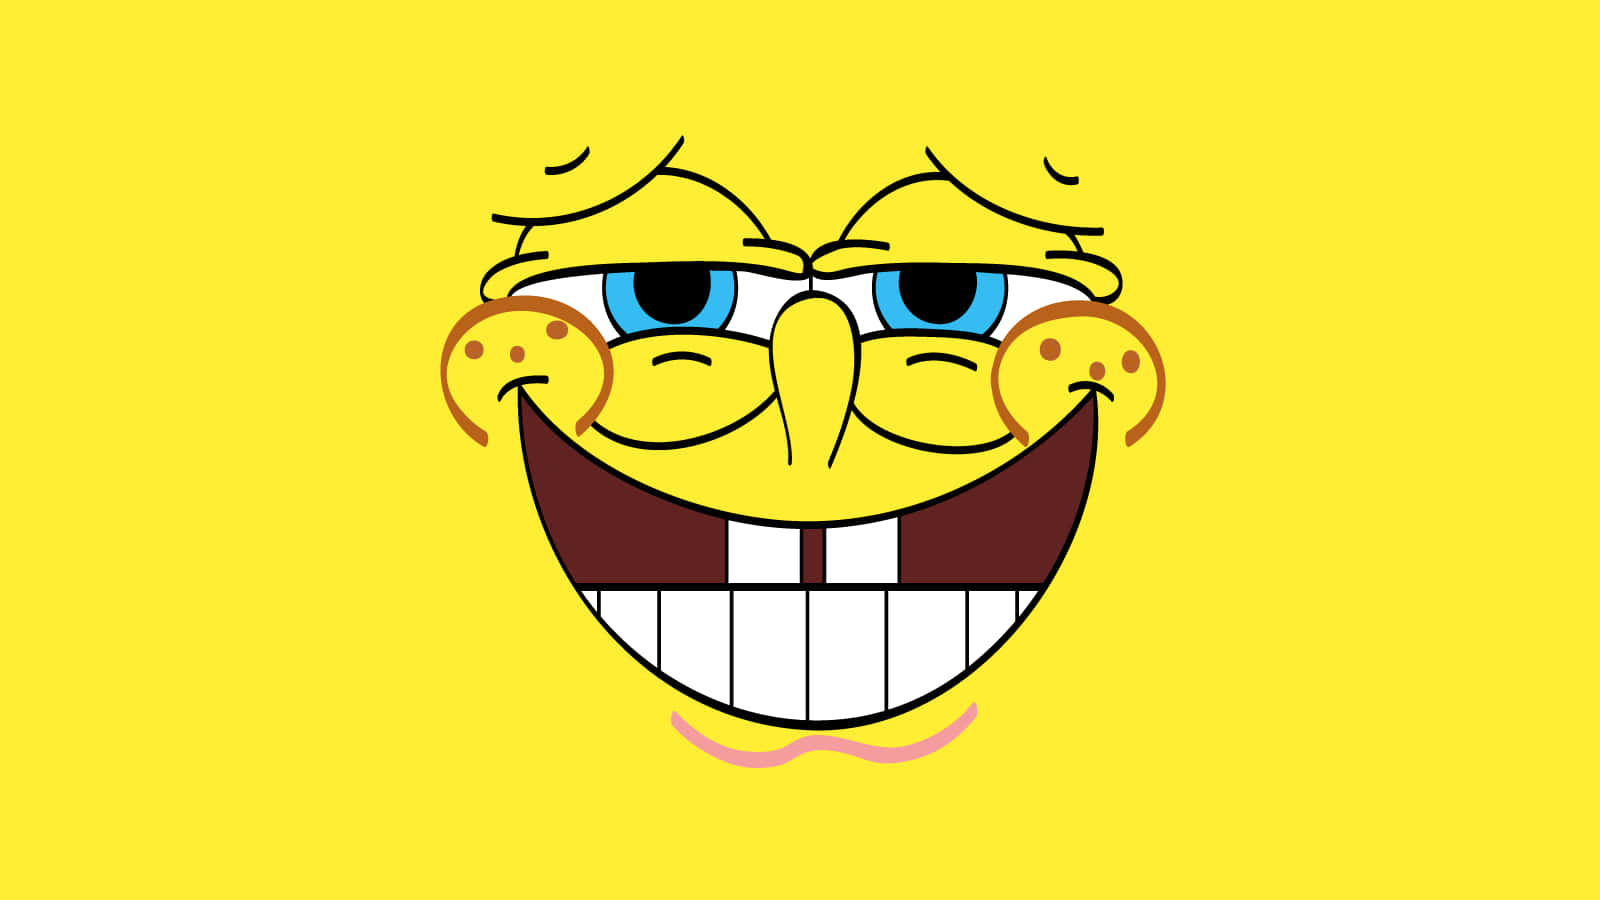 Spongebob is ready to make you laugh! Wallpaper